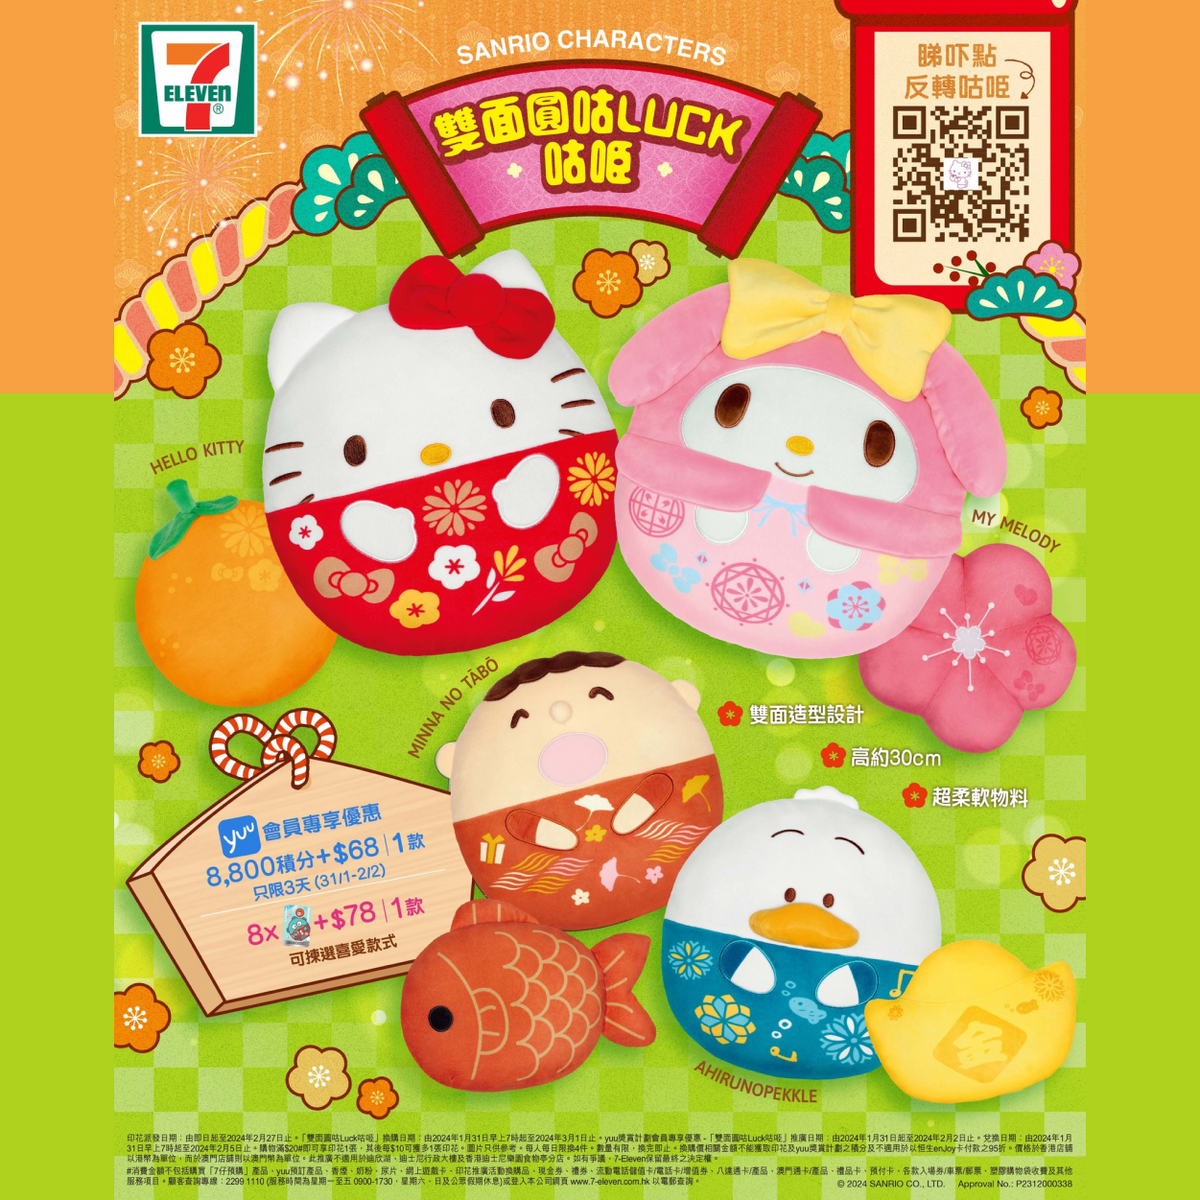 Cushion - Sanrio Character 7-Eleven Lucky (Hong Kong Edition)